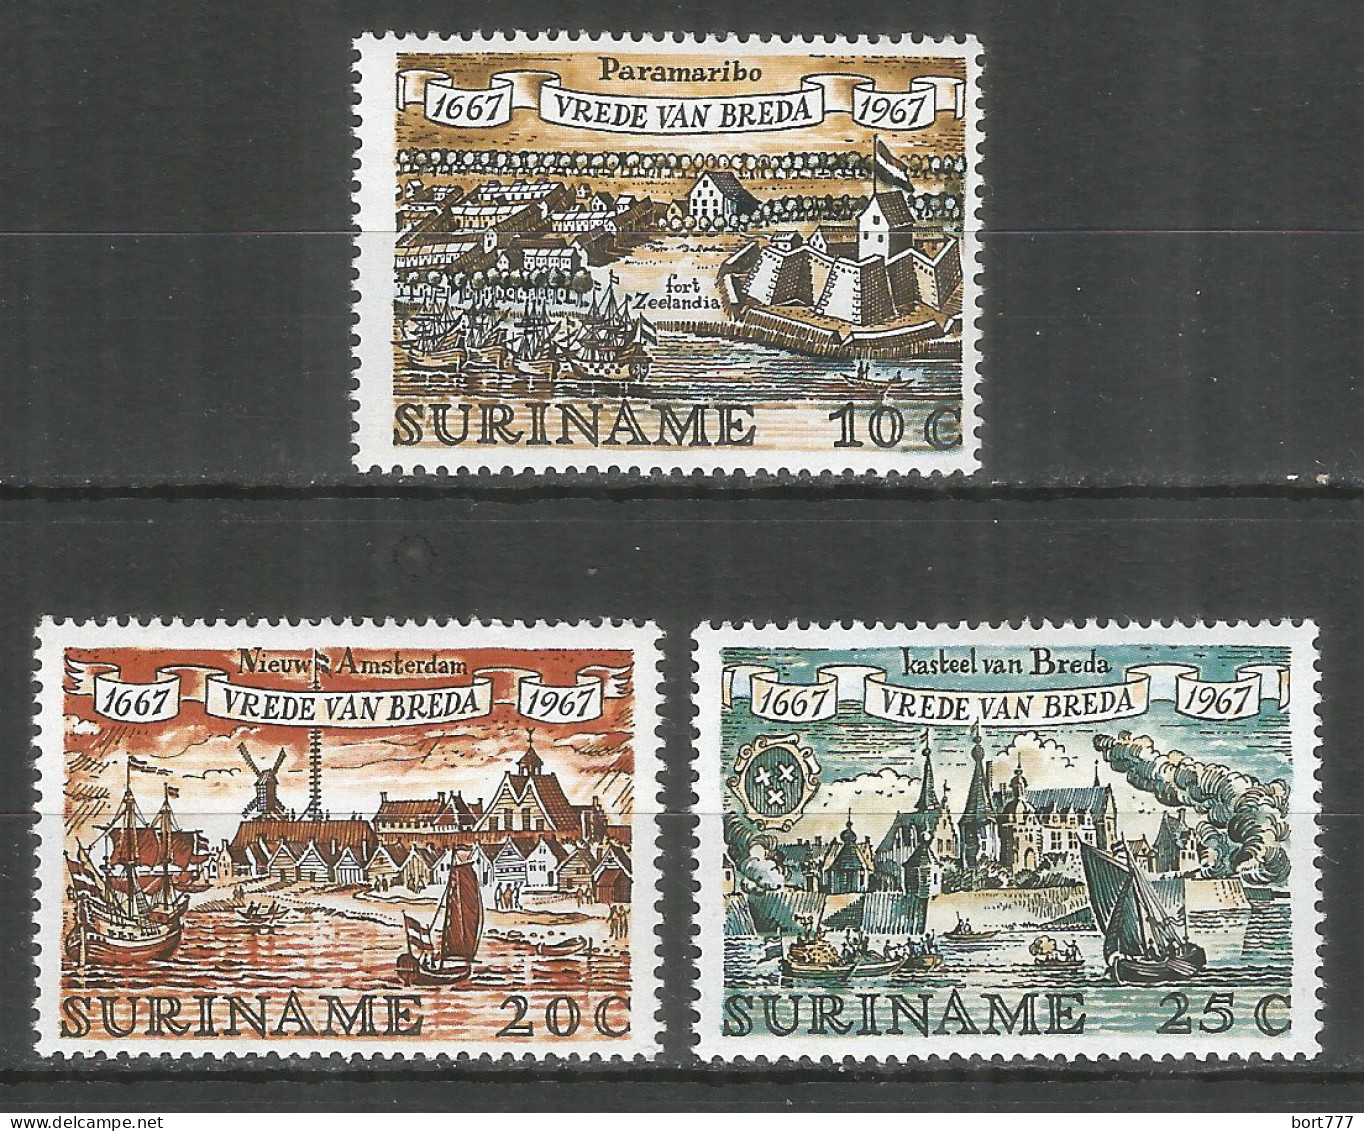 Surinam 1967 Mint Stamps Set MNH (**) - Surinam